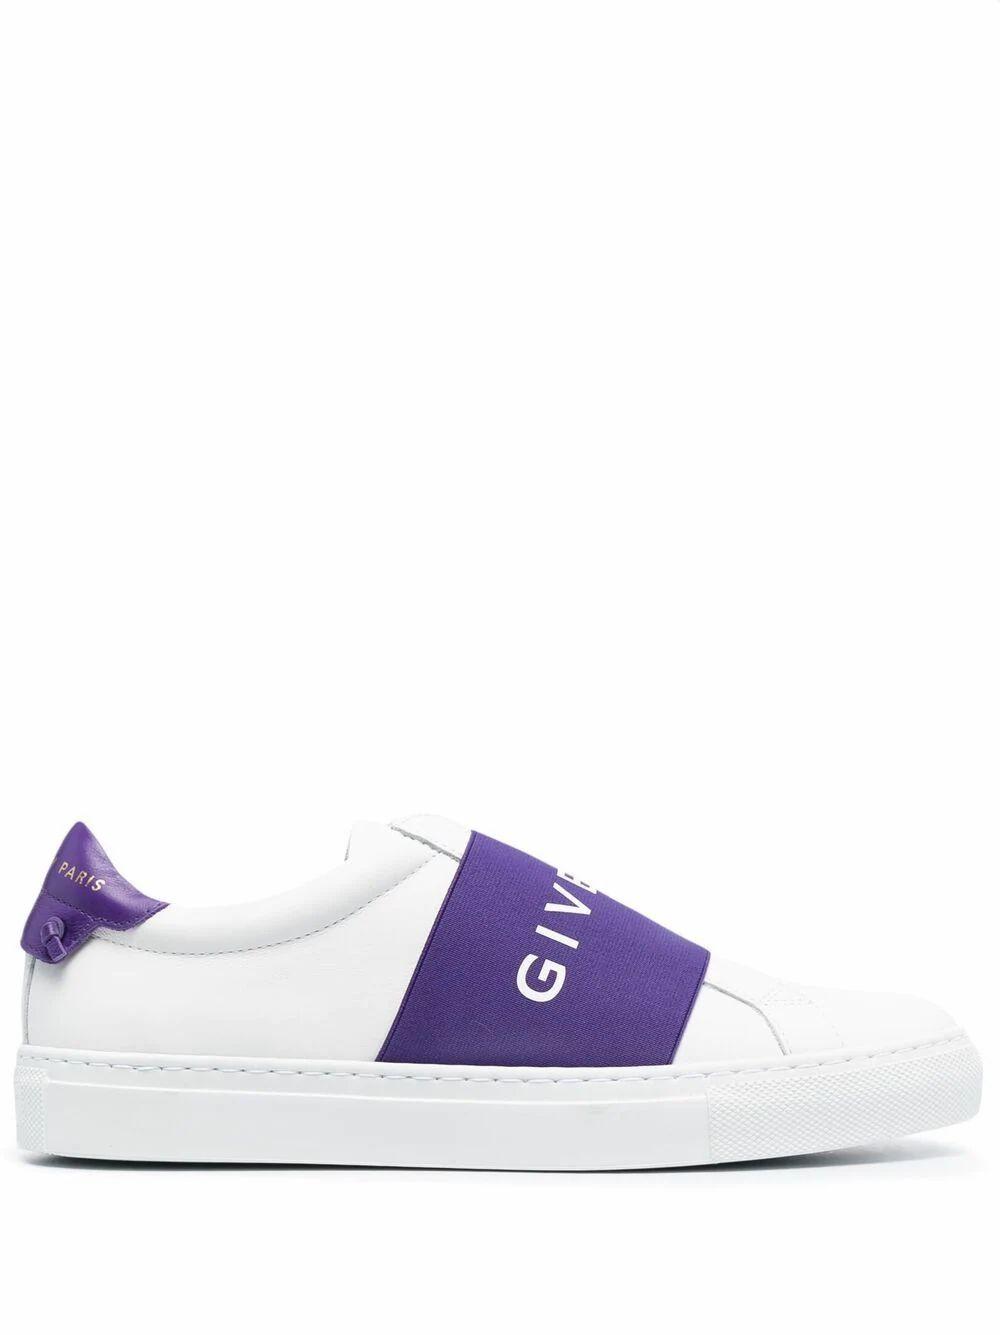 Total 37+ imagen purple givenchy shoes